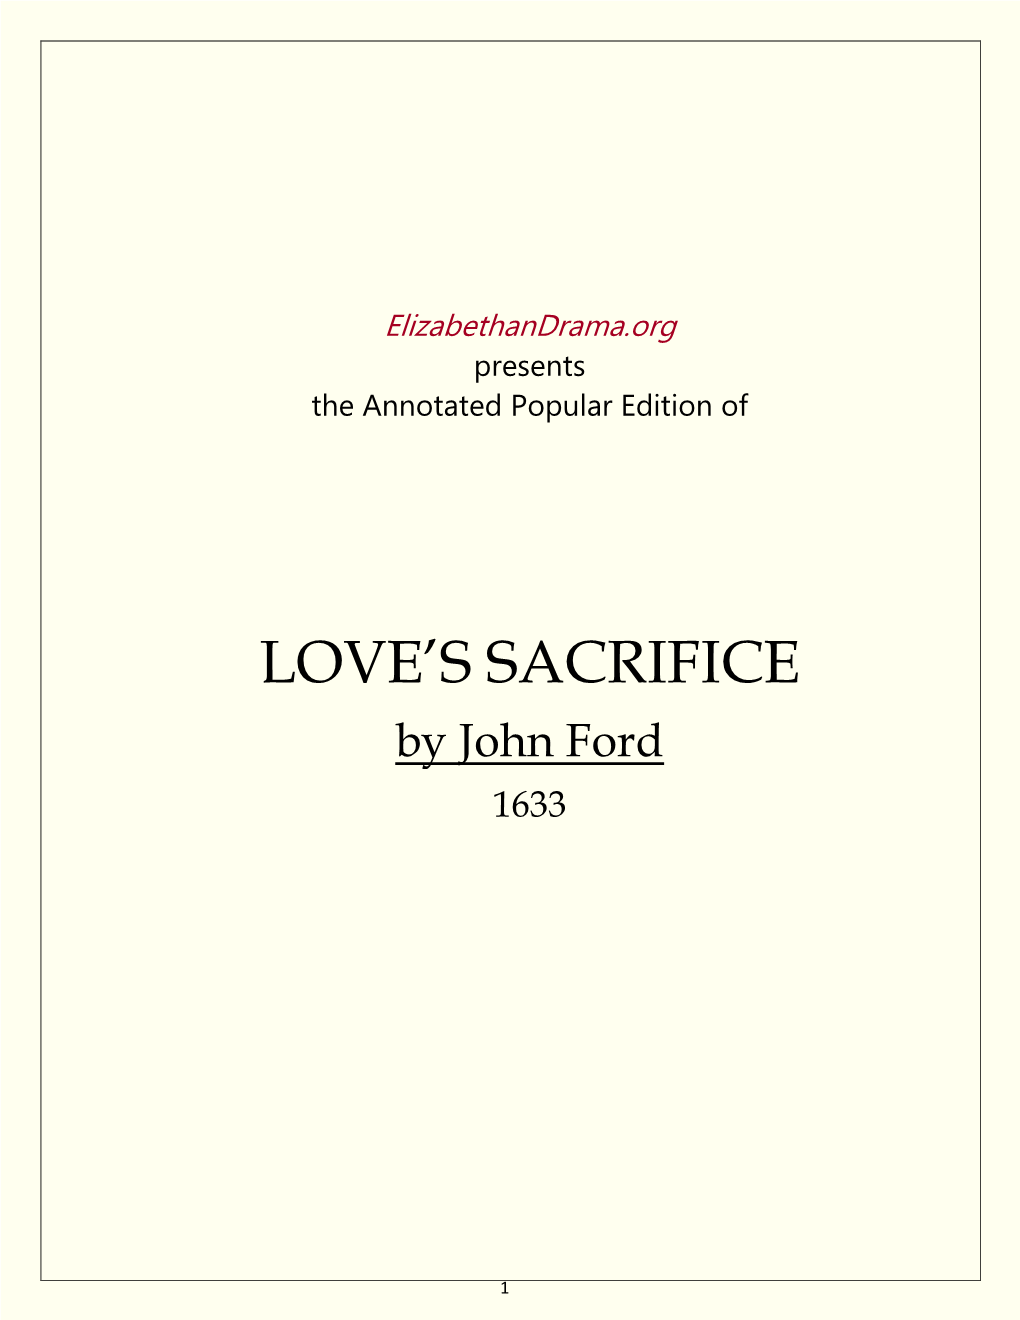 Love's Sacrifice